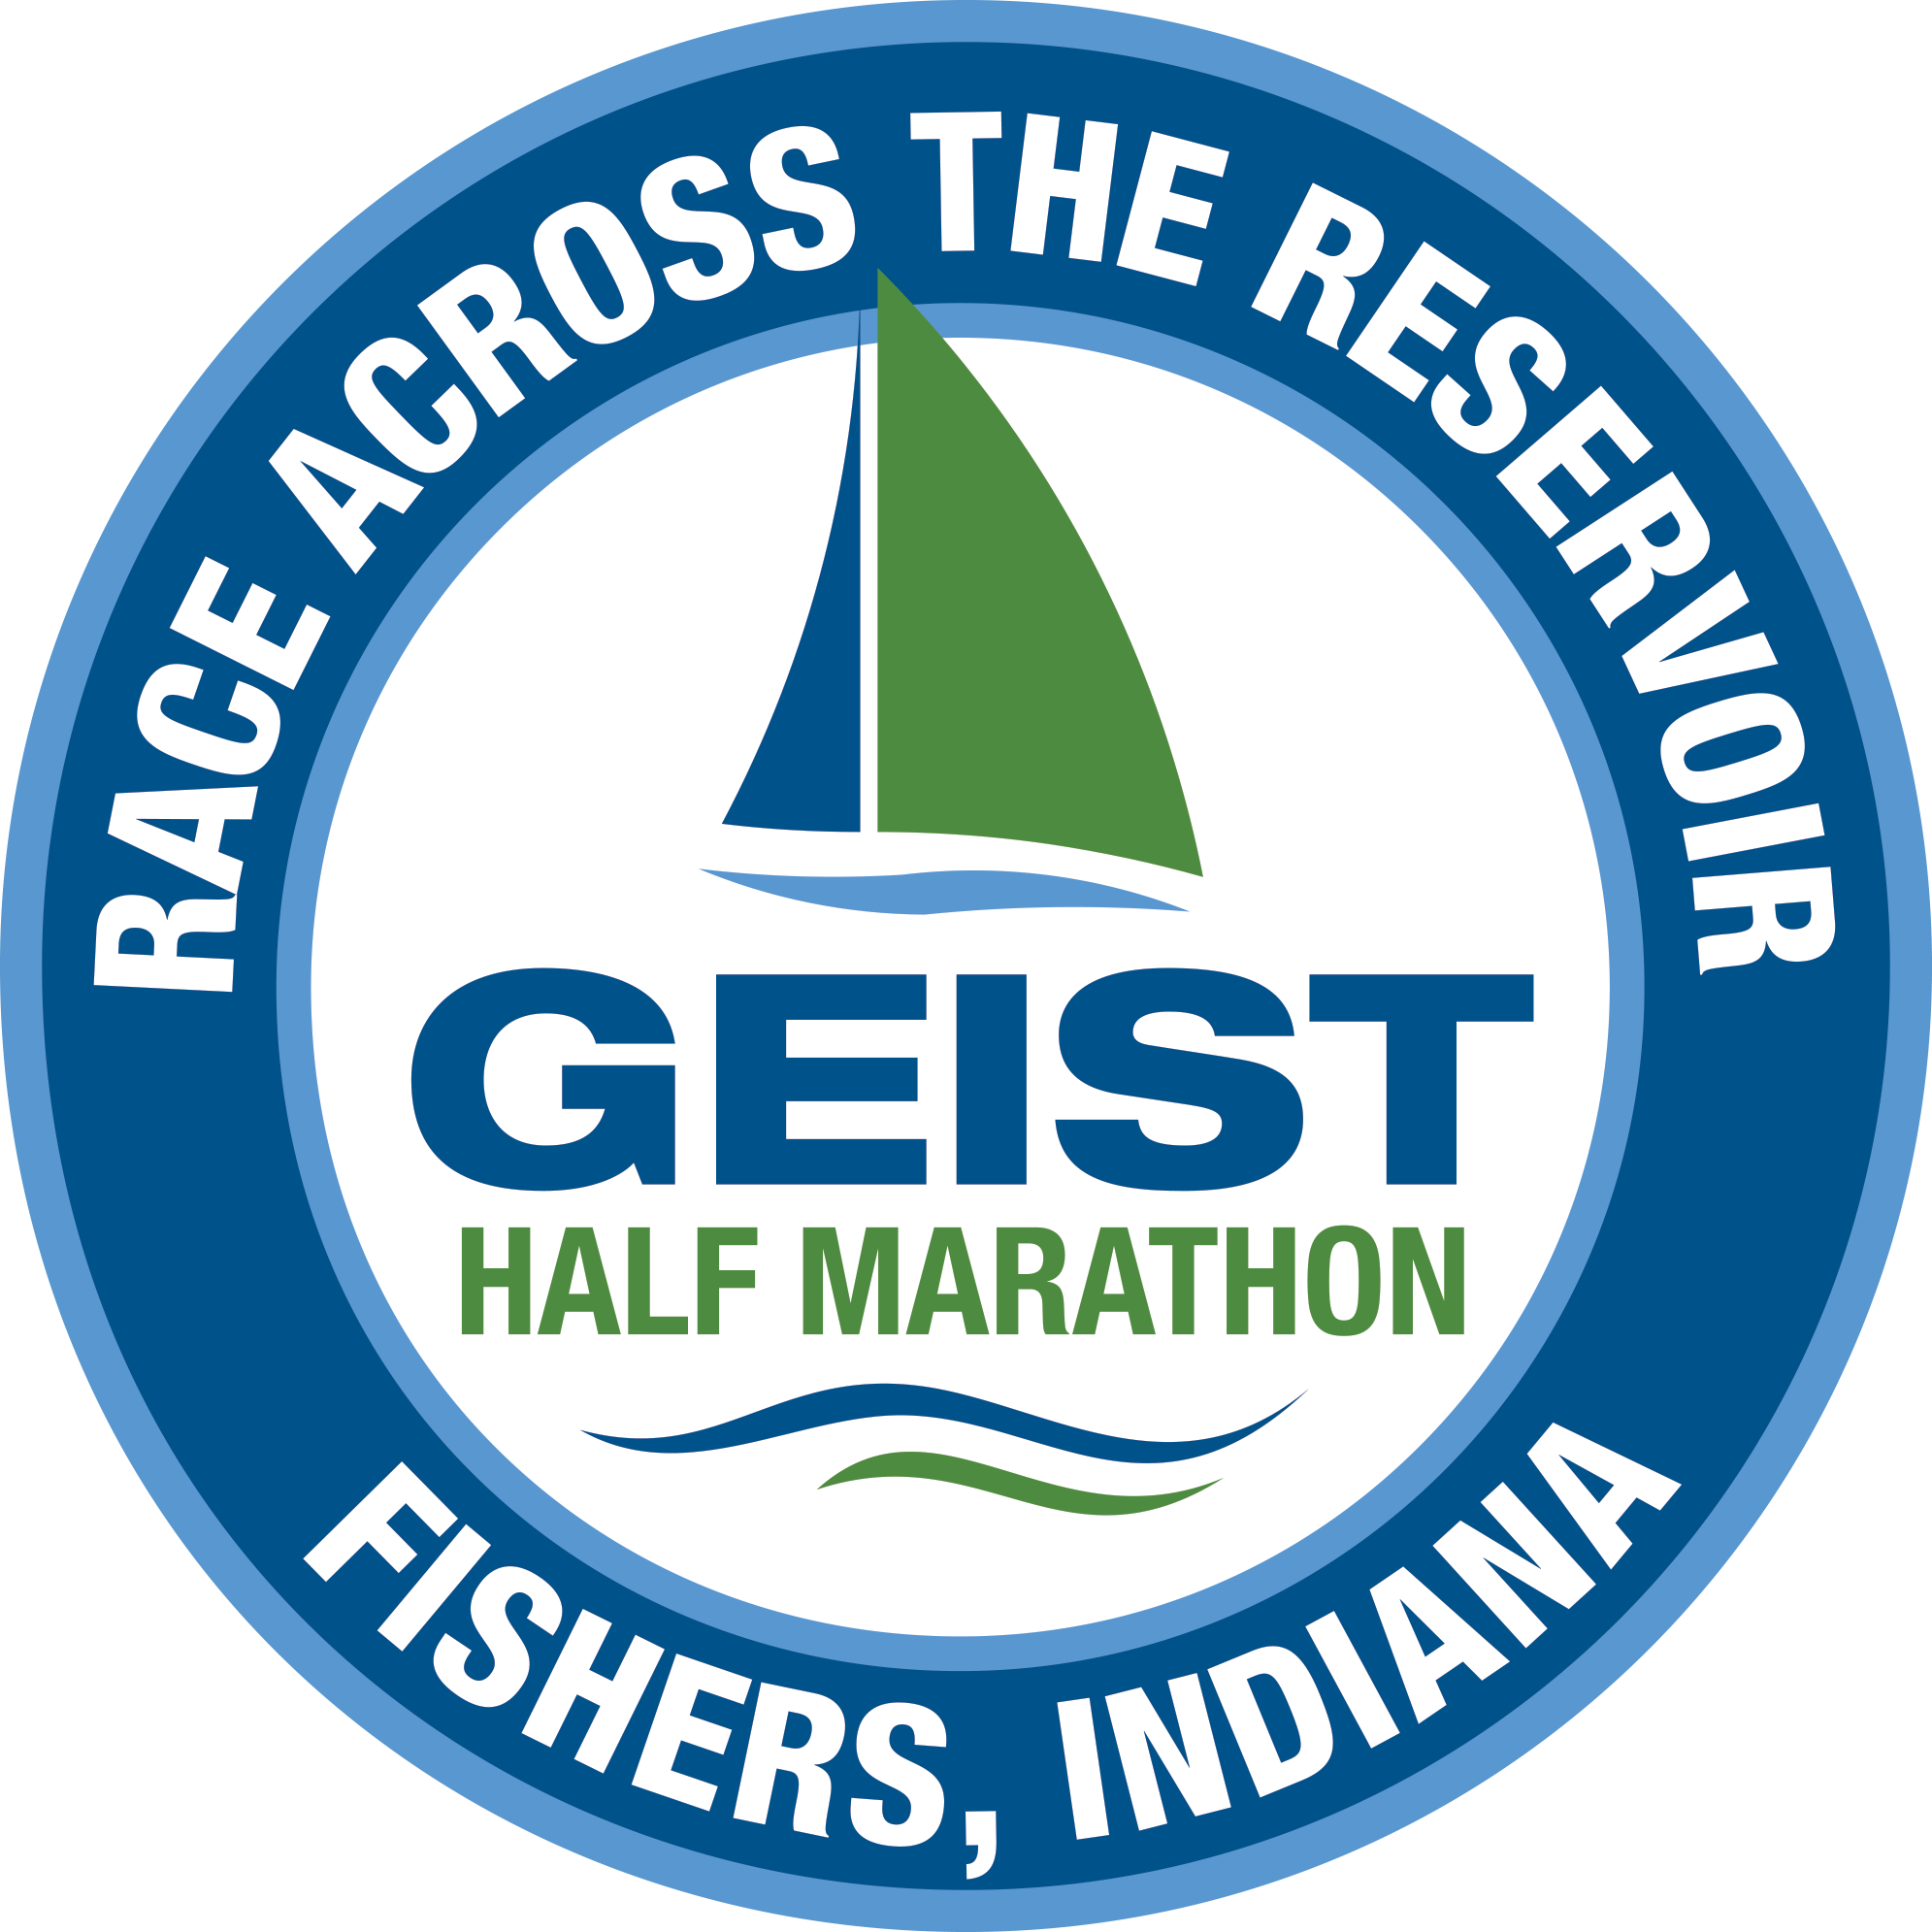 Race across the reservoir Geist Half Marathon Fishers, Indiana